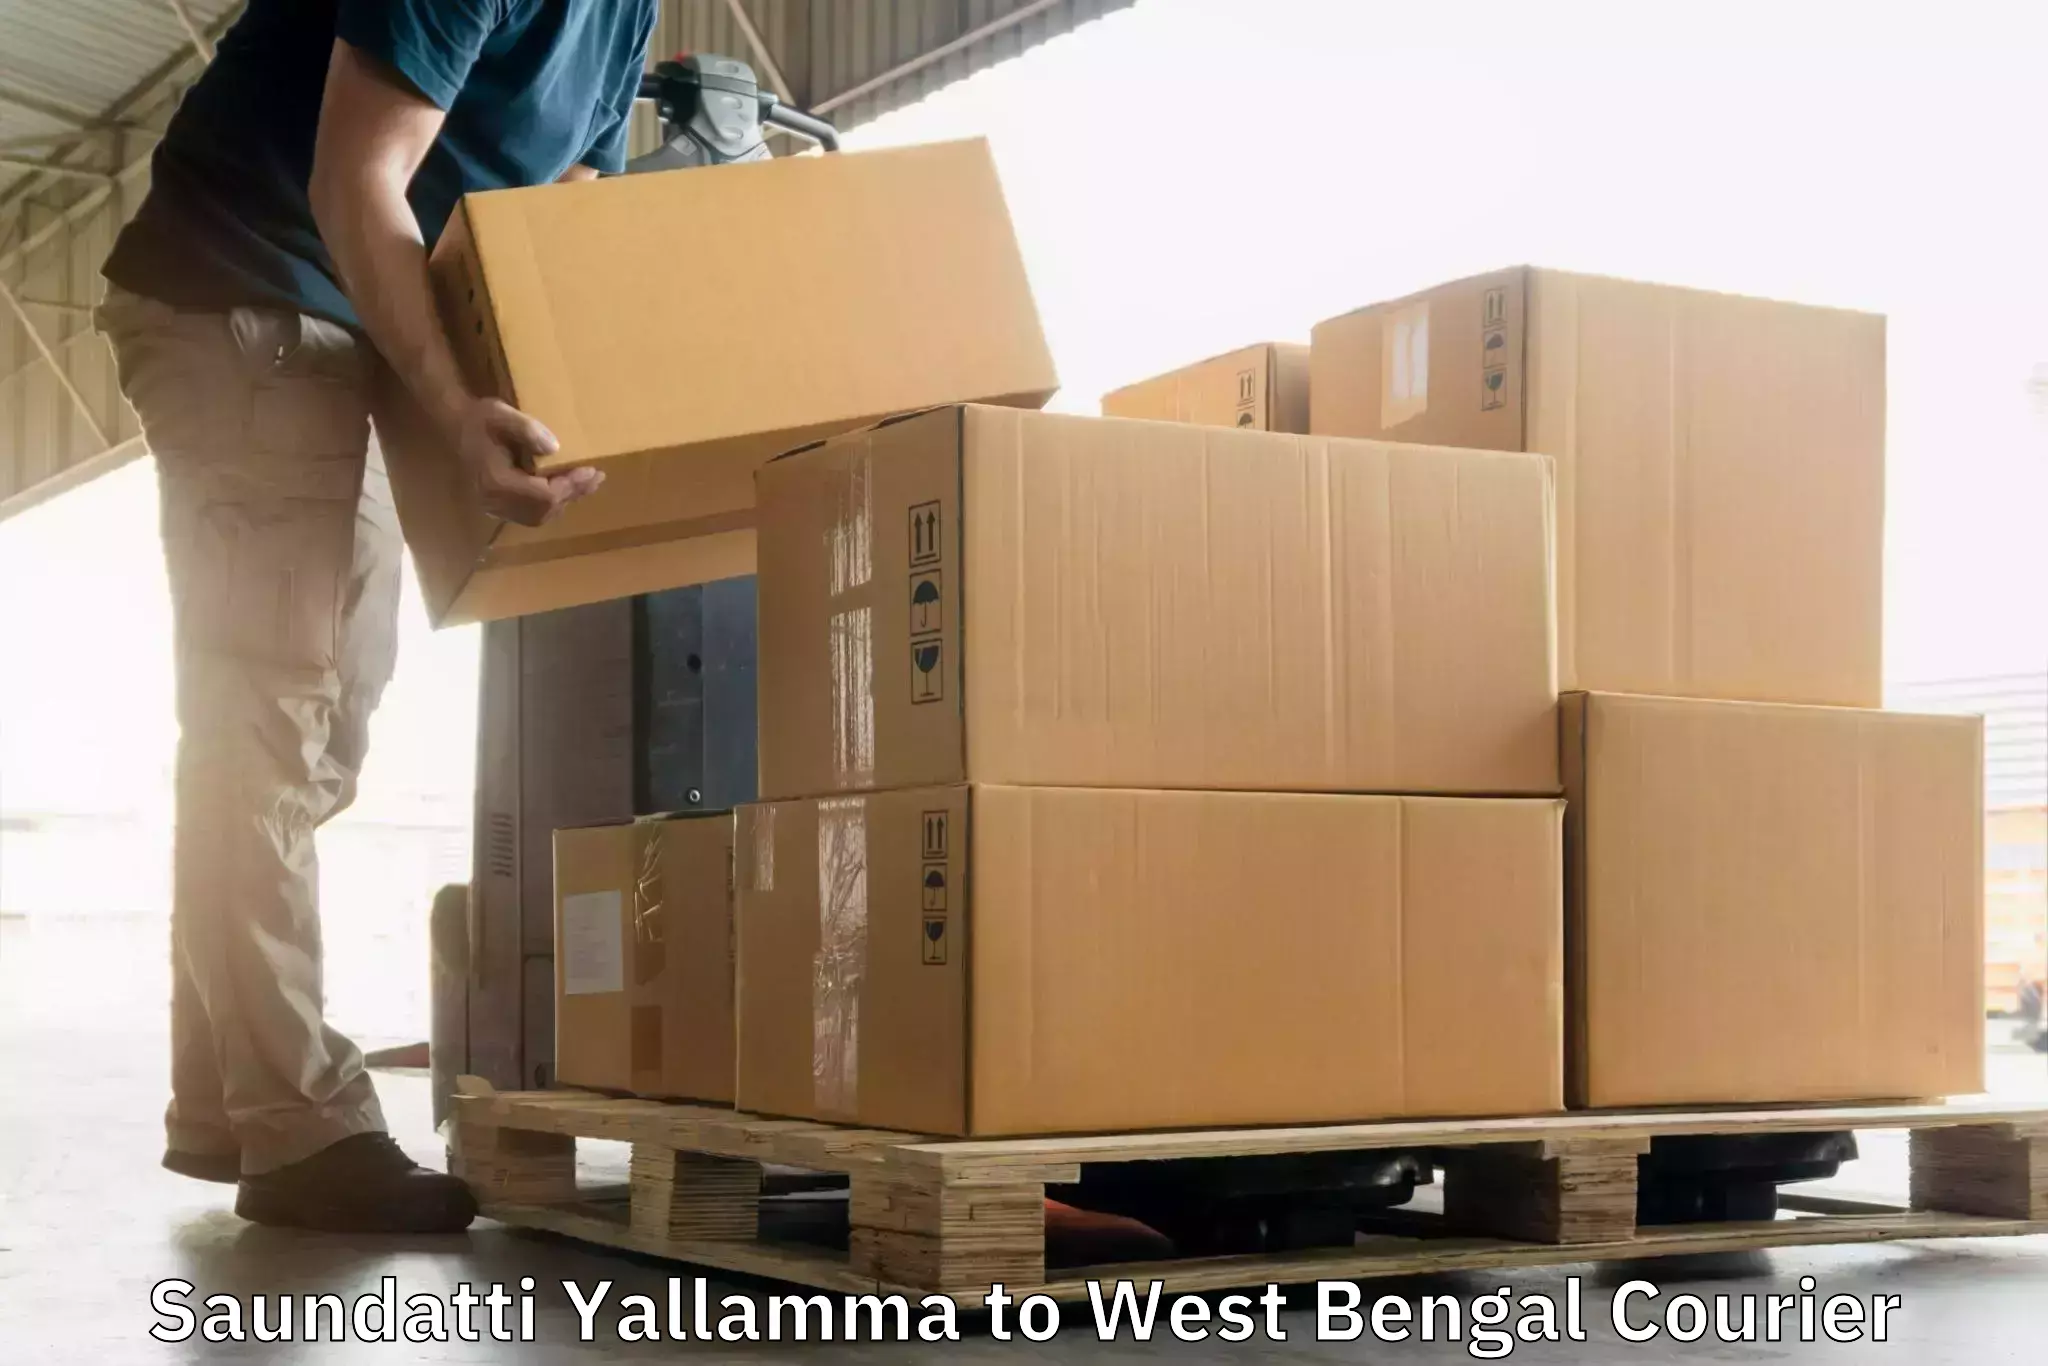 Courier service innovation Saundatti Yallamma to West Bengal